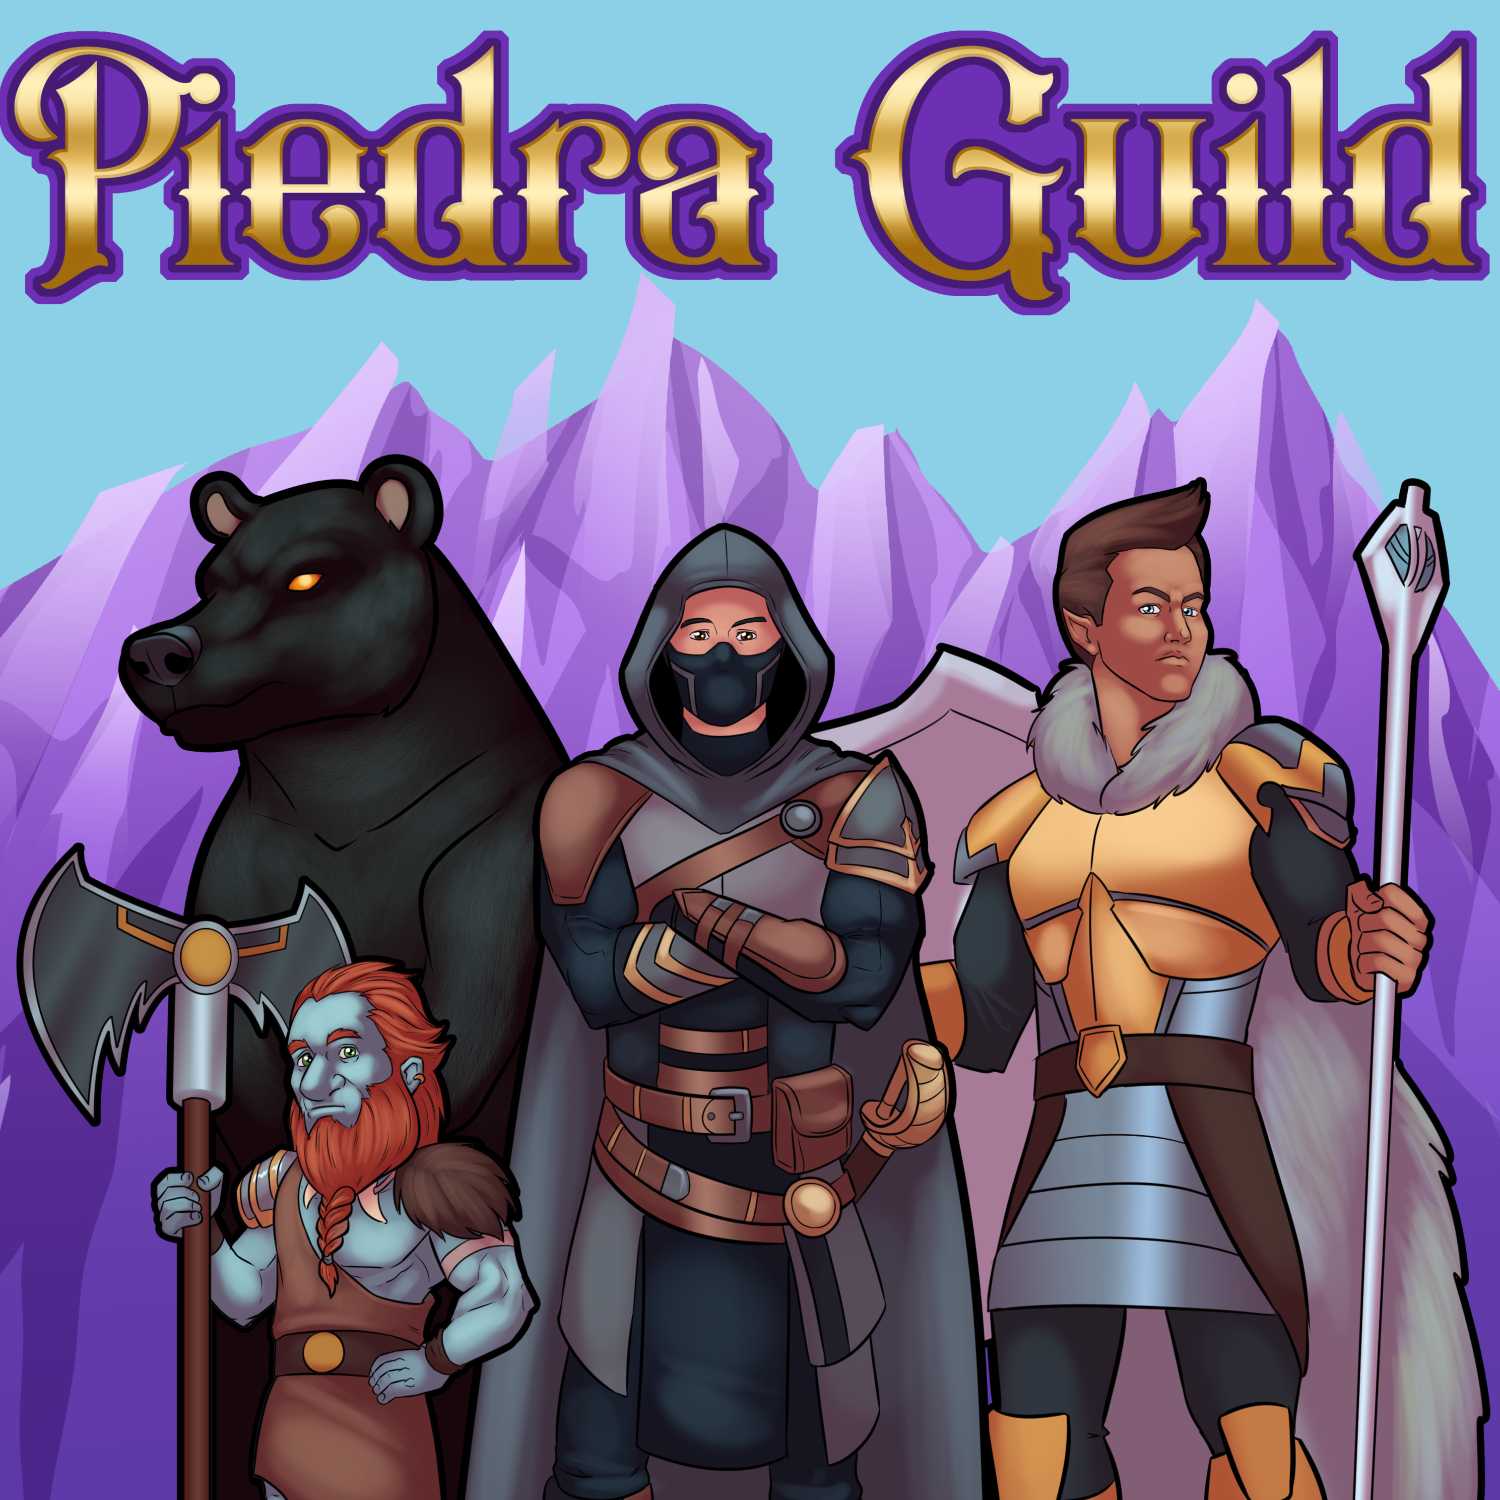 Piedra Guild